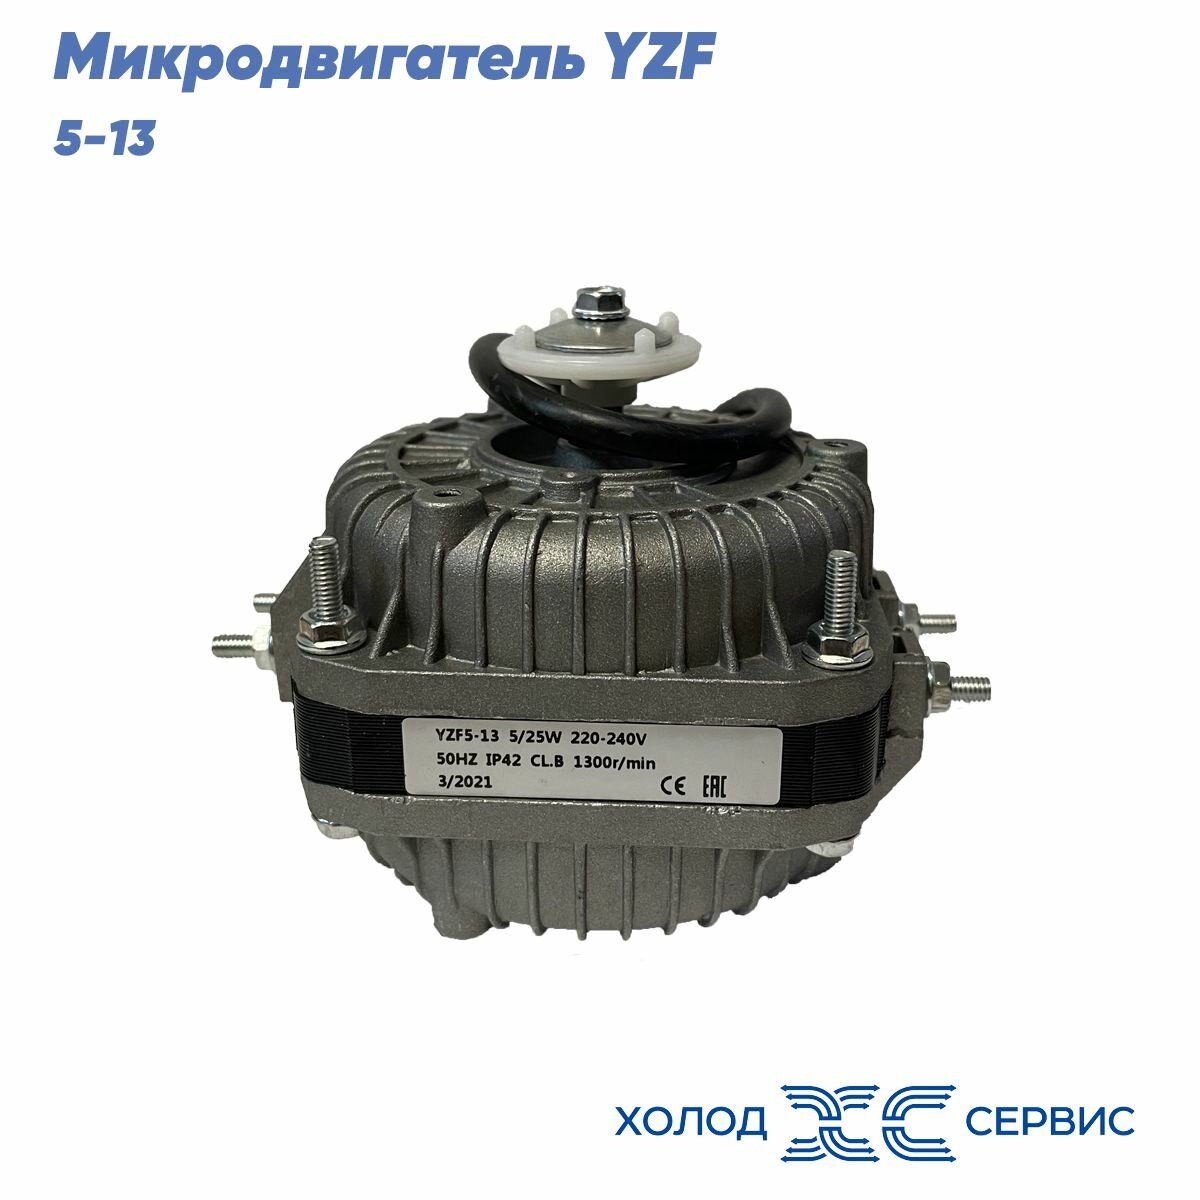 Микродвигатель, электромотор для холодильника, мотор обдува, двигатель вентилятора YZF 5-13, мощность 5Вт